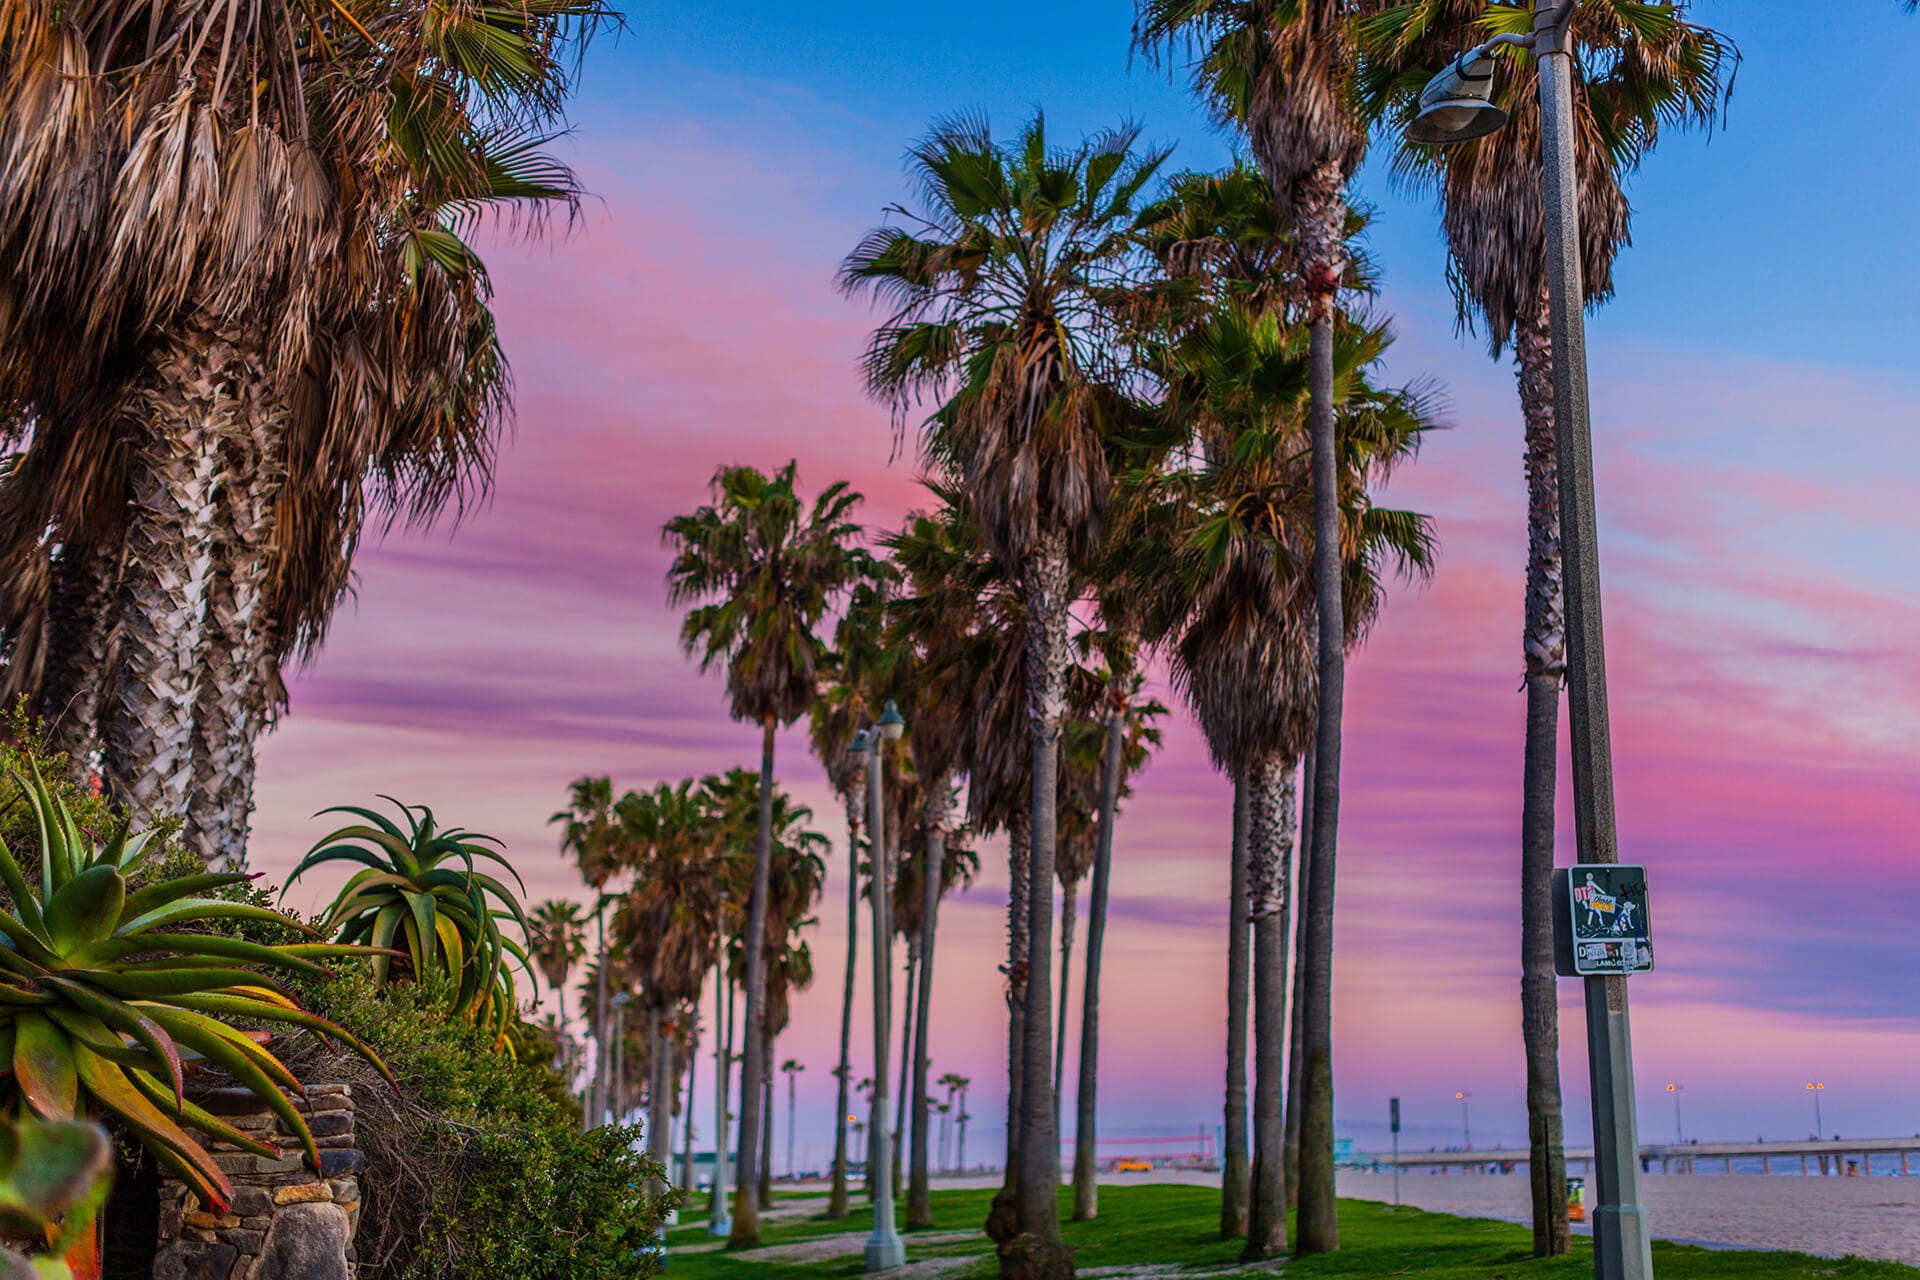 Los Angeles Row of Palm Trees